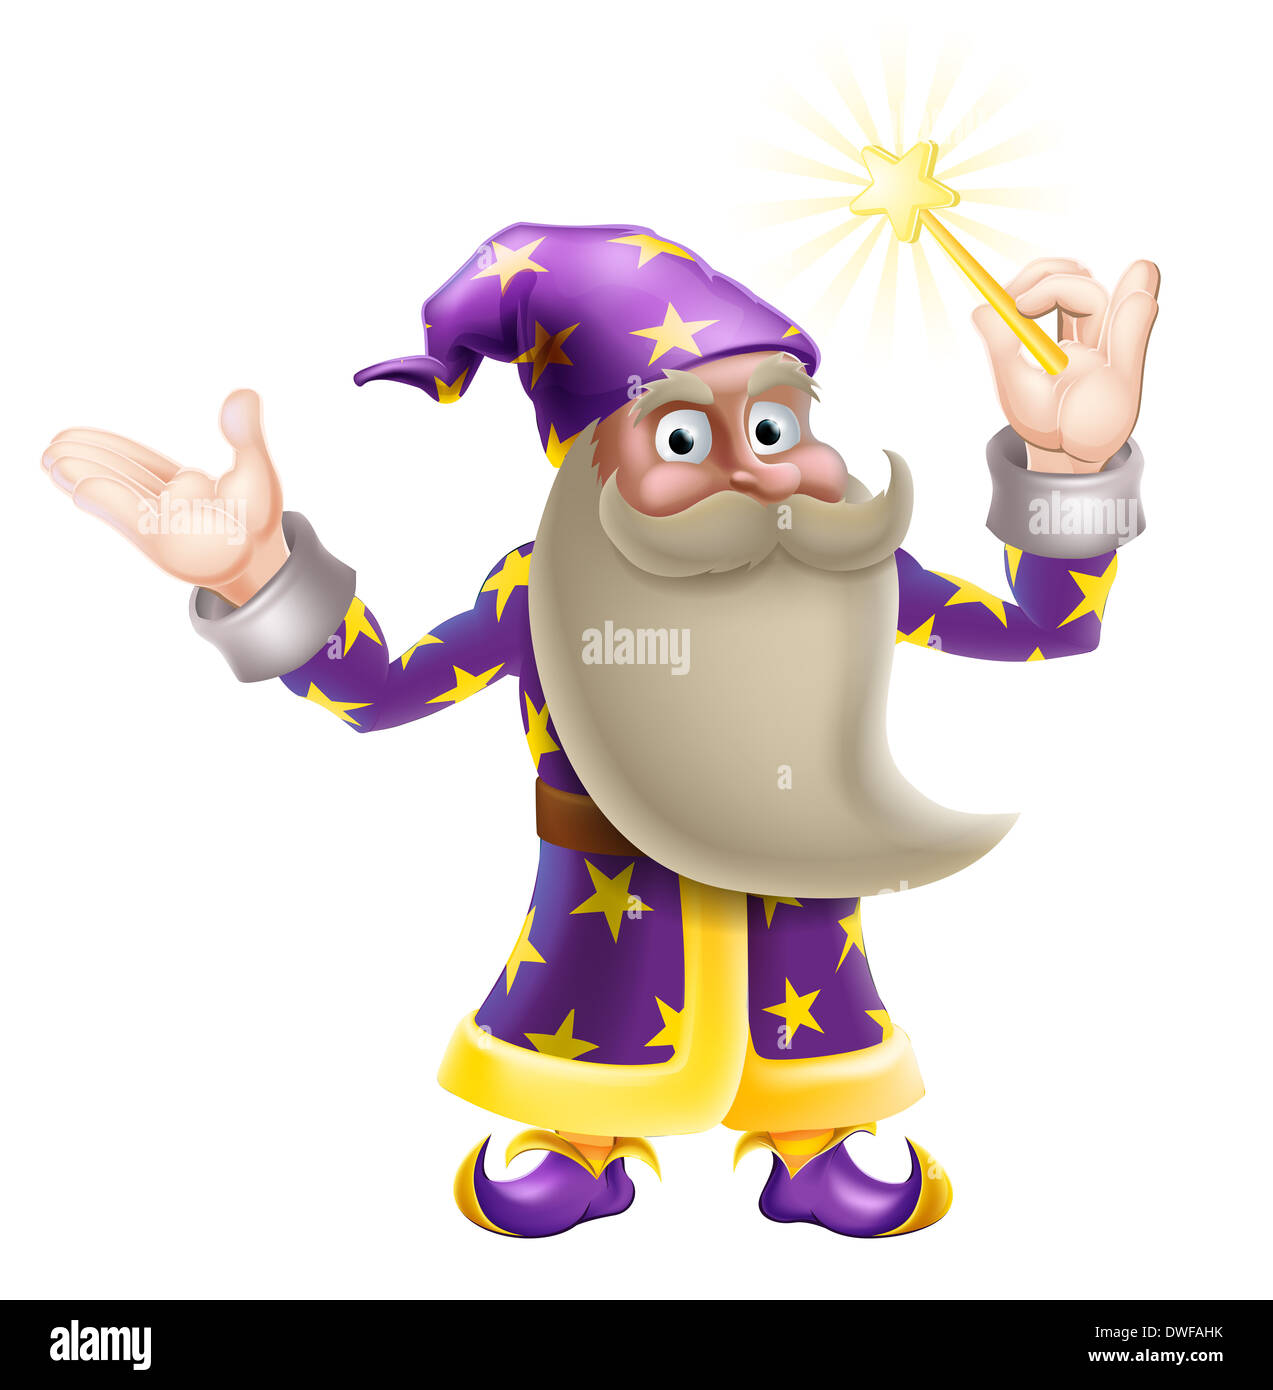 An illustration of a cartoon wizard character waving a magic wand Stock Photo